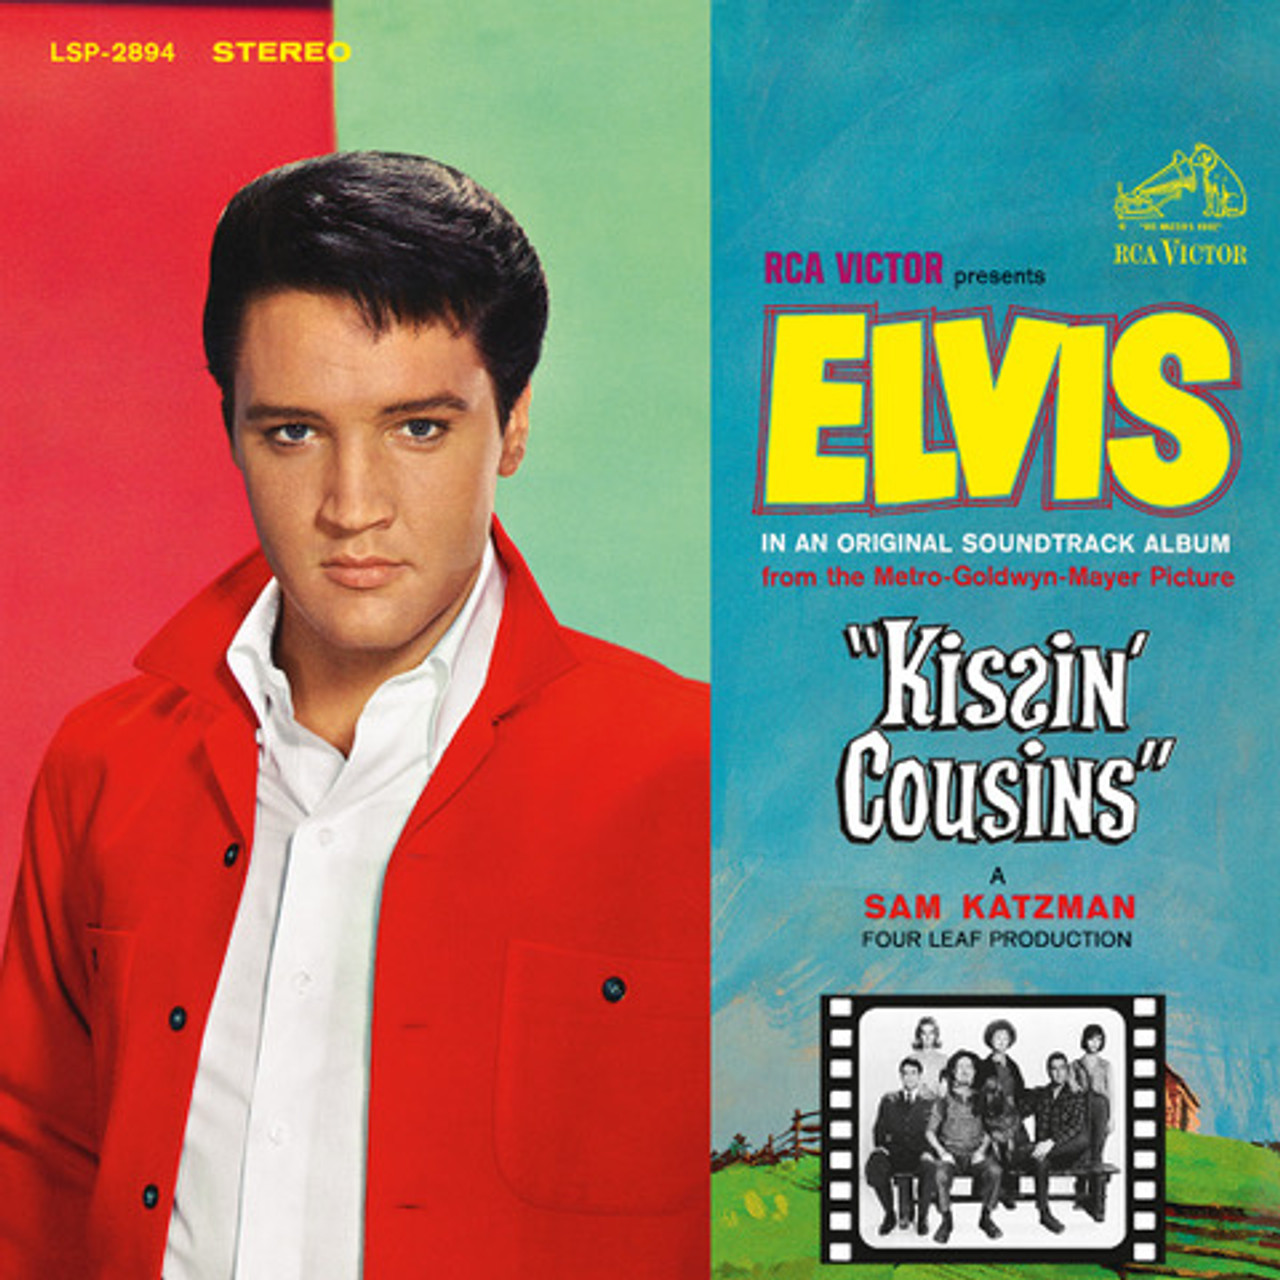 Special　CD　Soundtrack　Kissin'　Elvis:　Album　Presley　Elvis　Cousins　Edition　FTD　Movie